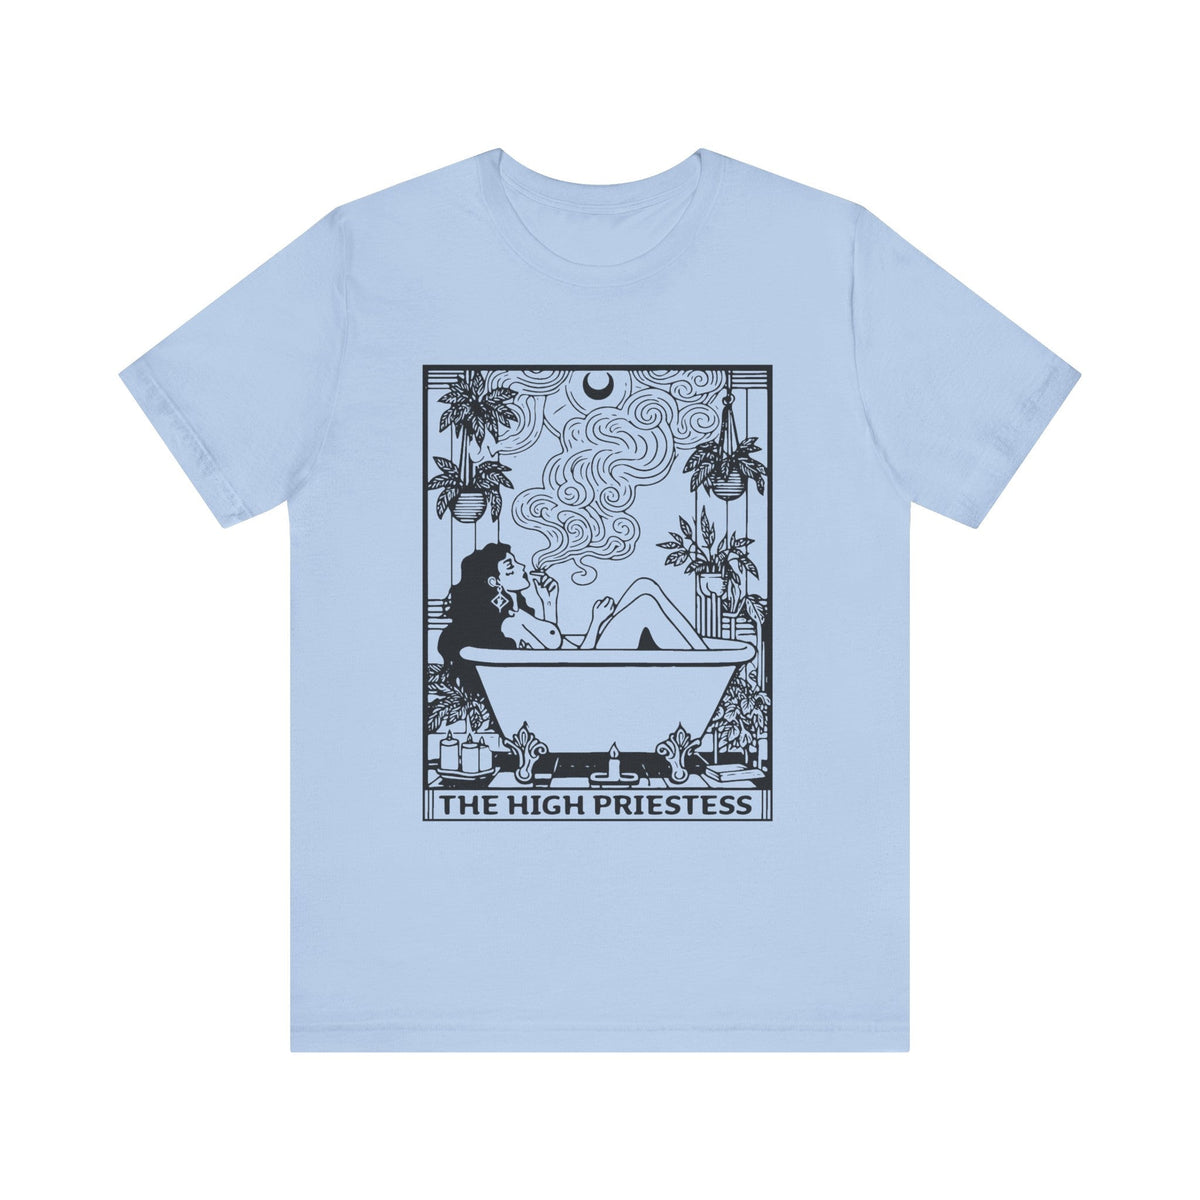 High Priestess Tarot Block Print Short Sleeve Tee - Goth Cloth Co.T - Shirt17367758751416163361